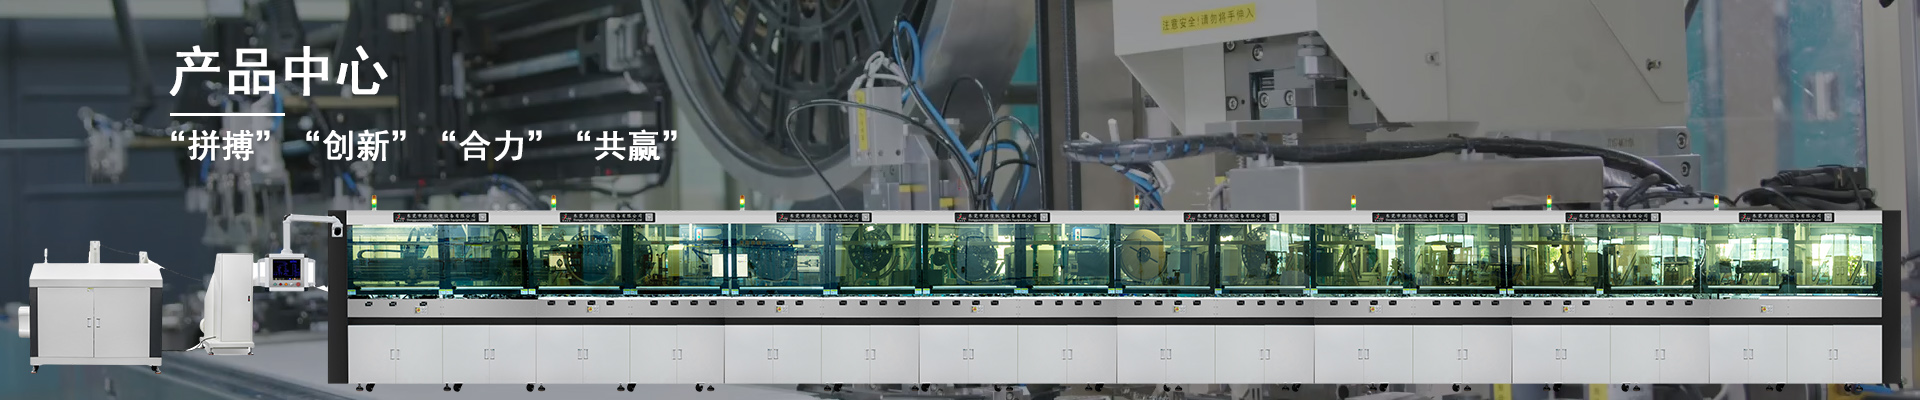 DDR系列 自动生产线-东莞市捷信机电设备有限公司